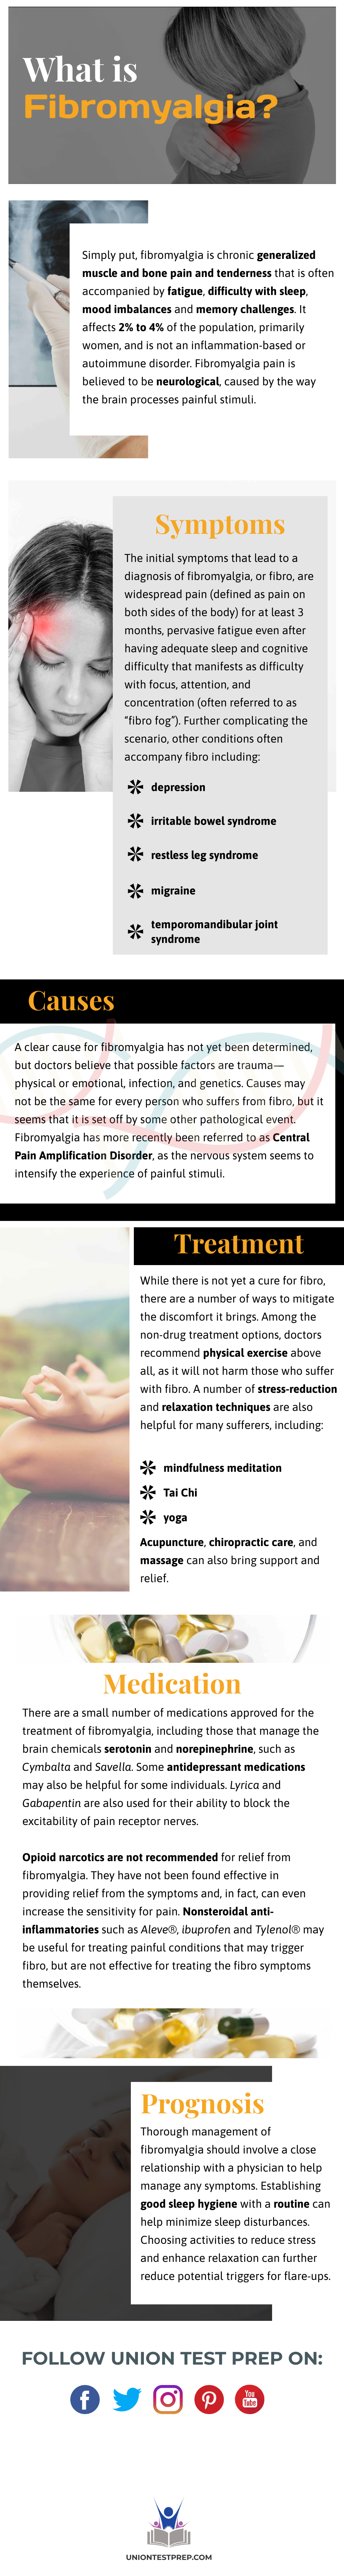 What is Fibromyalgia?